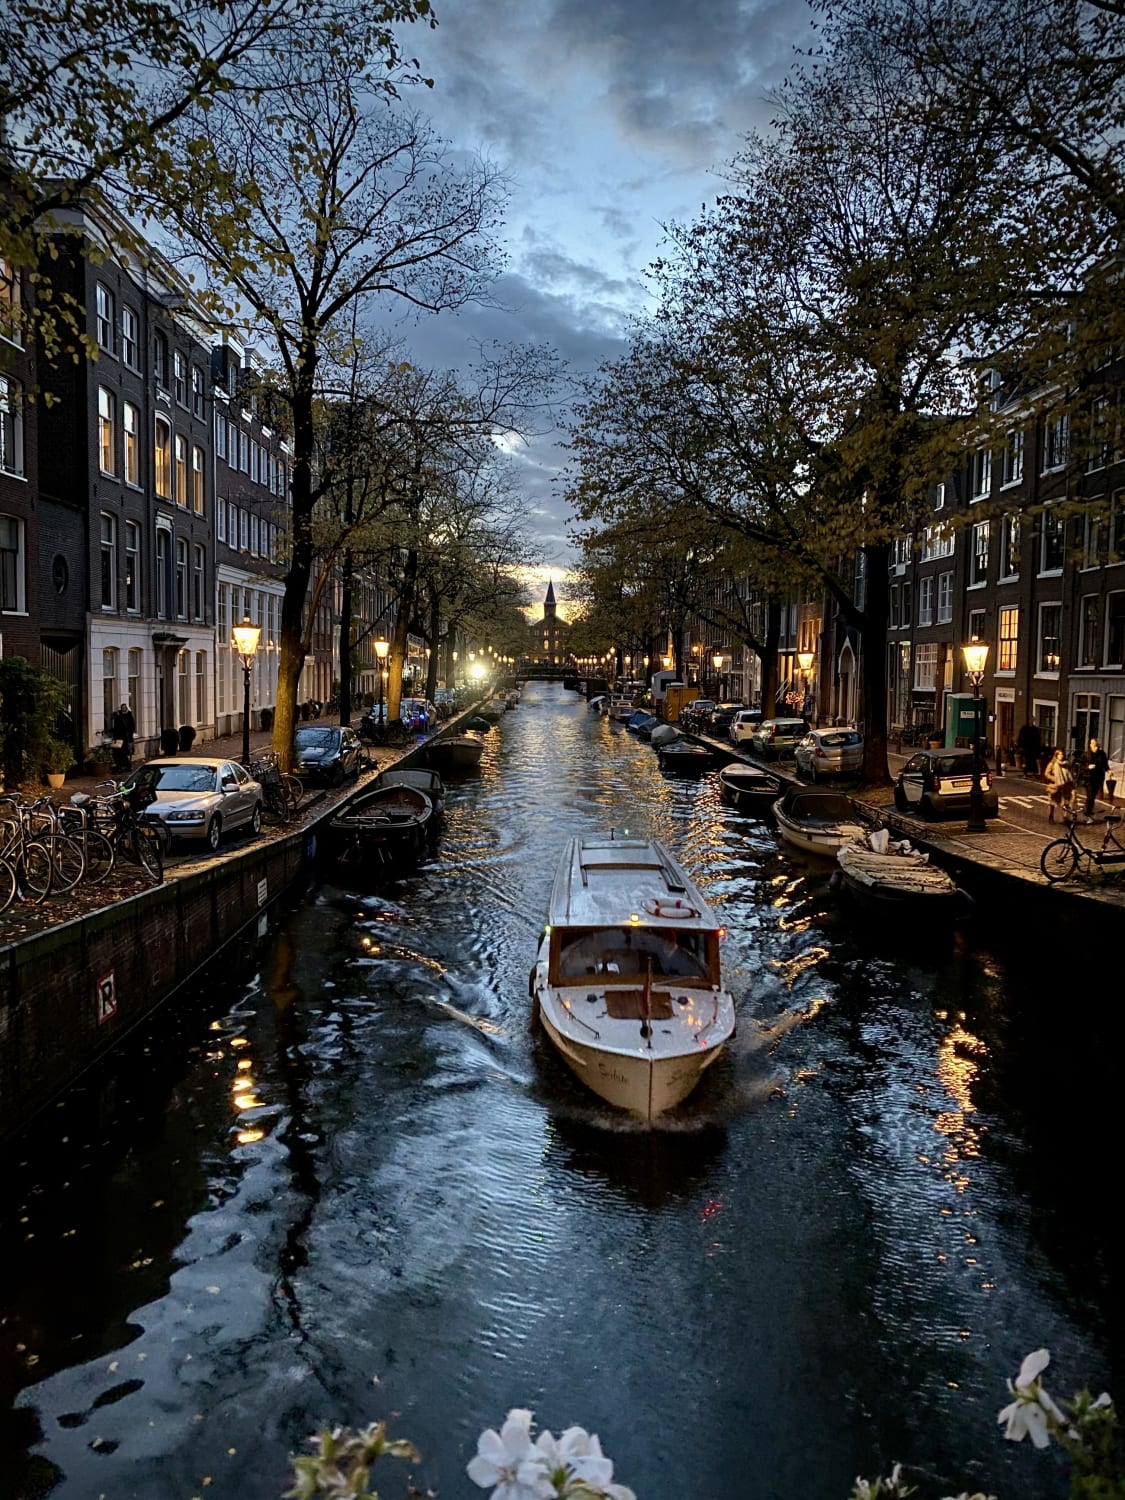 Quaint Night in Jordaan, Amsterdam